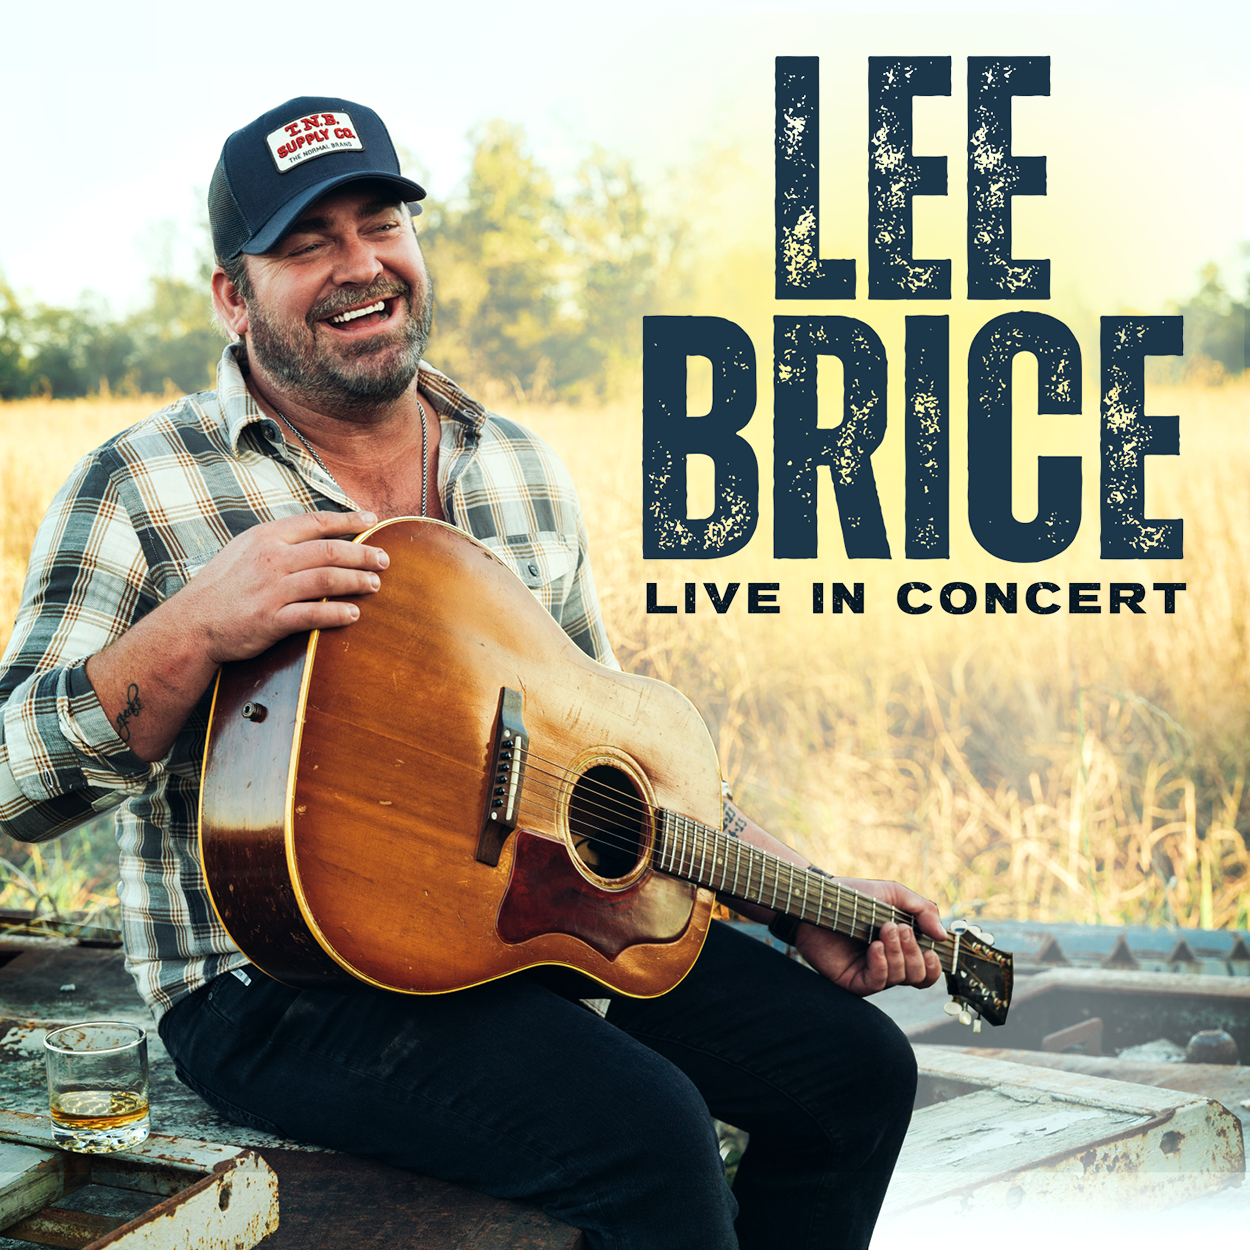 Lee Brice | After Hours Concerts Central, VA